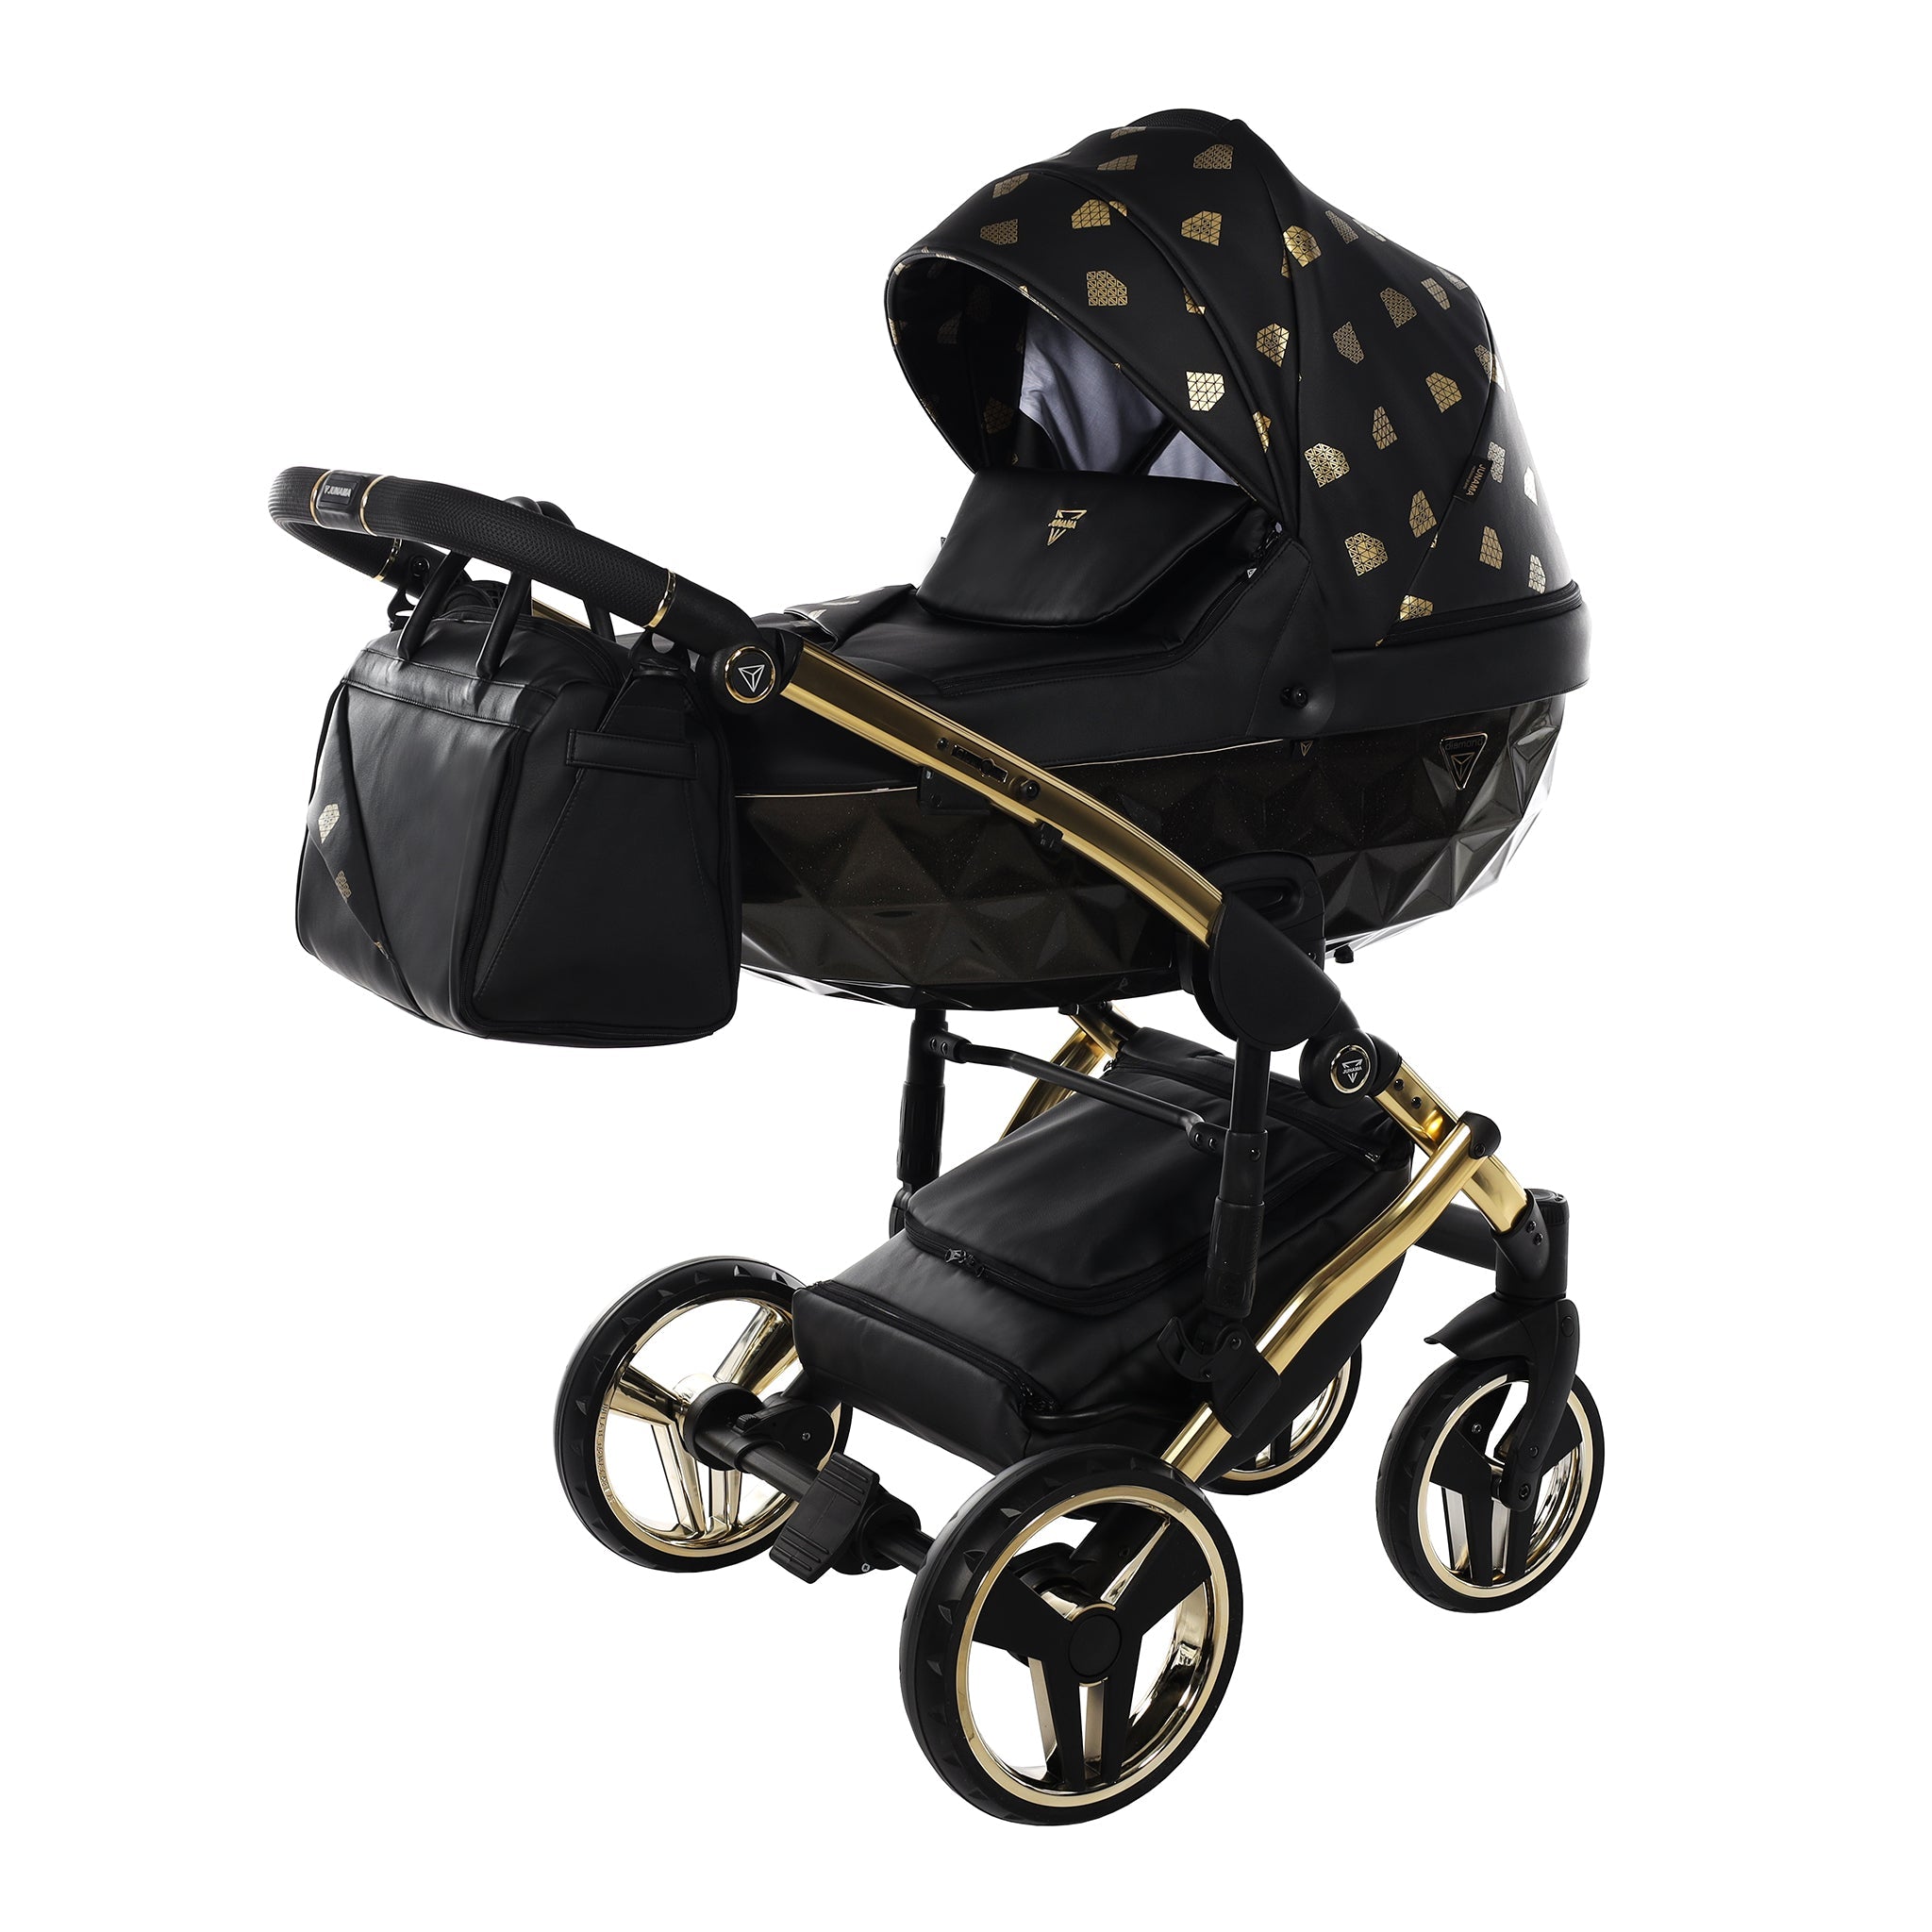 Junama GLOW, baby prams or stroller 2 in 1 - Gold and Black, Code number: JUNGLW05